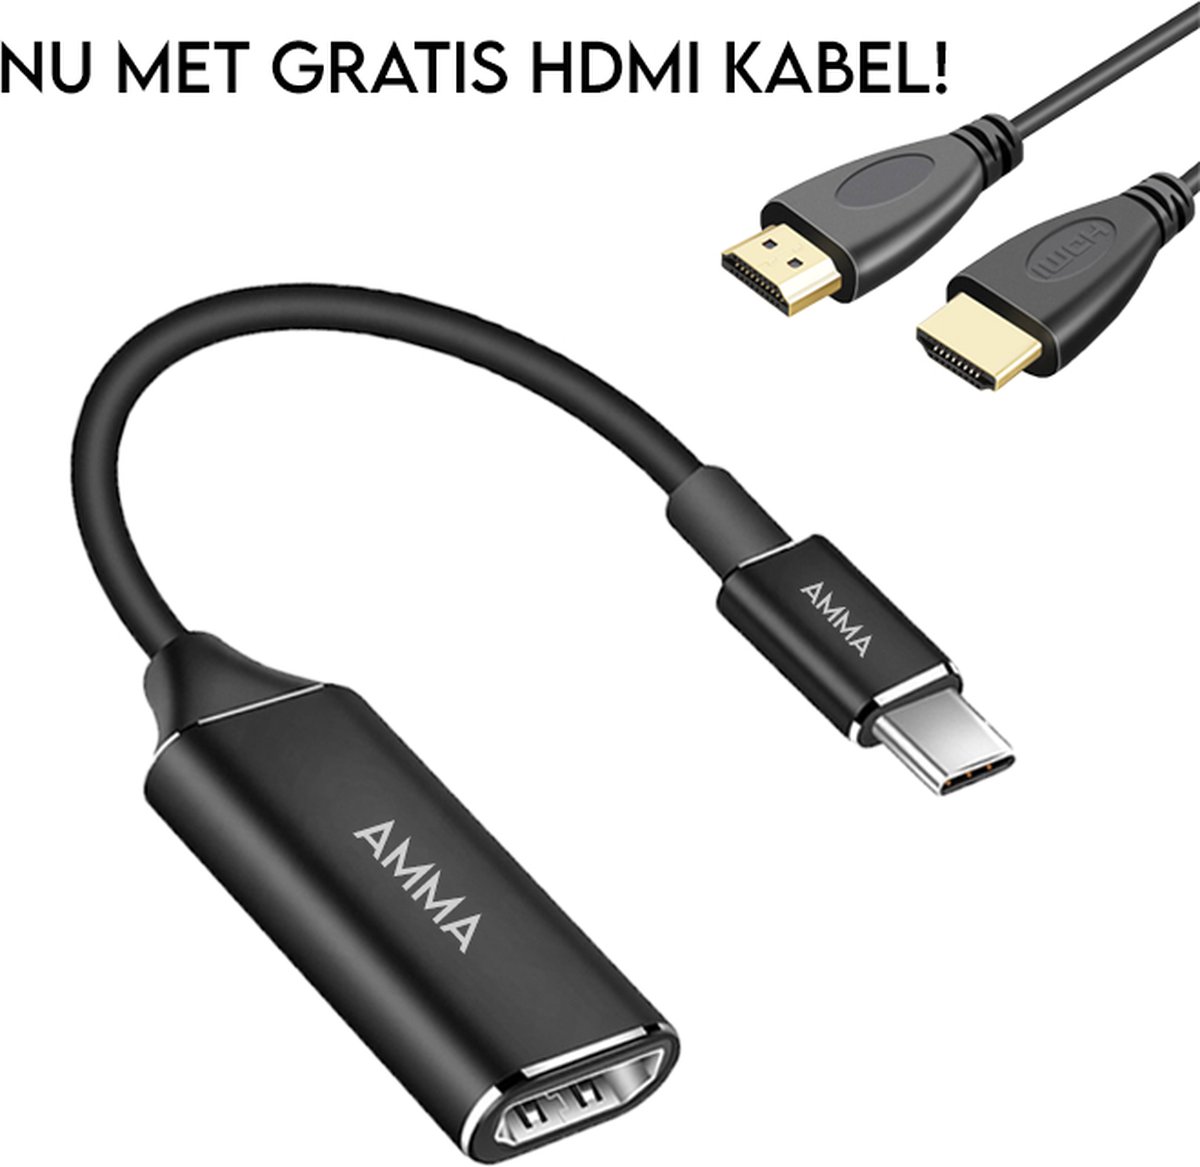 Usb C Naar HDMI adapter – Type-c to HDMI converter - usb c hdmi - usb c naar hdmi kabel - Geschikt voor Apple Macbook - Chromebook - Lenovo – Samsung en meer – Gratis HDMI kabel